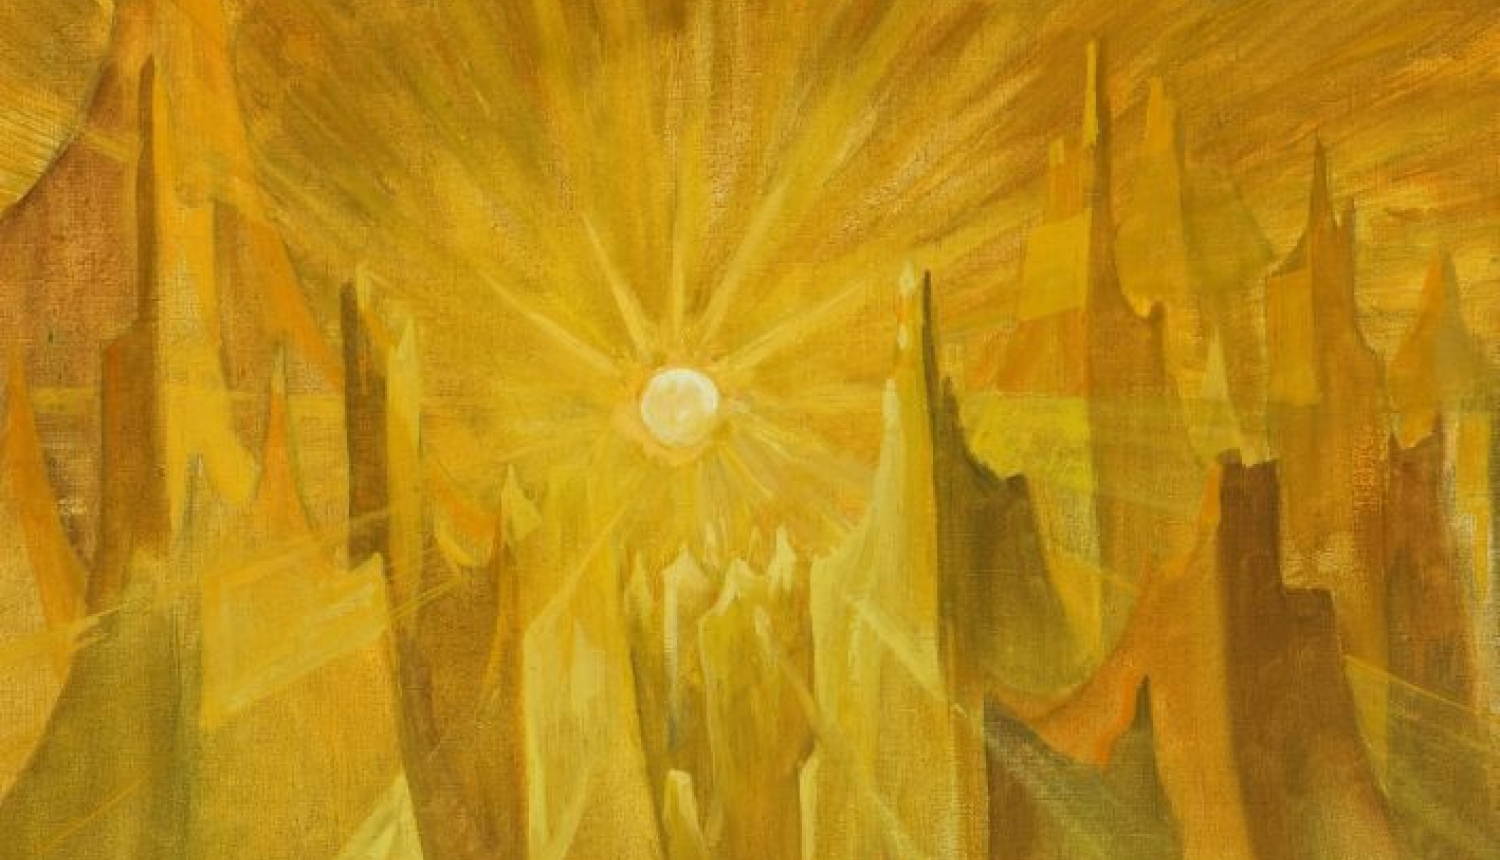 Rūdolfa Pērles glezna "Saule"